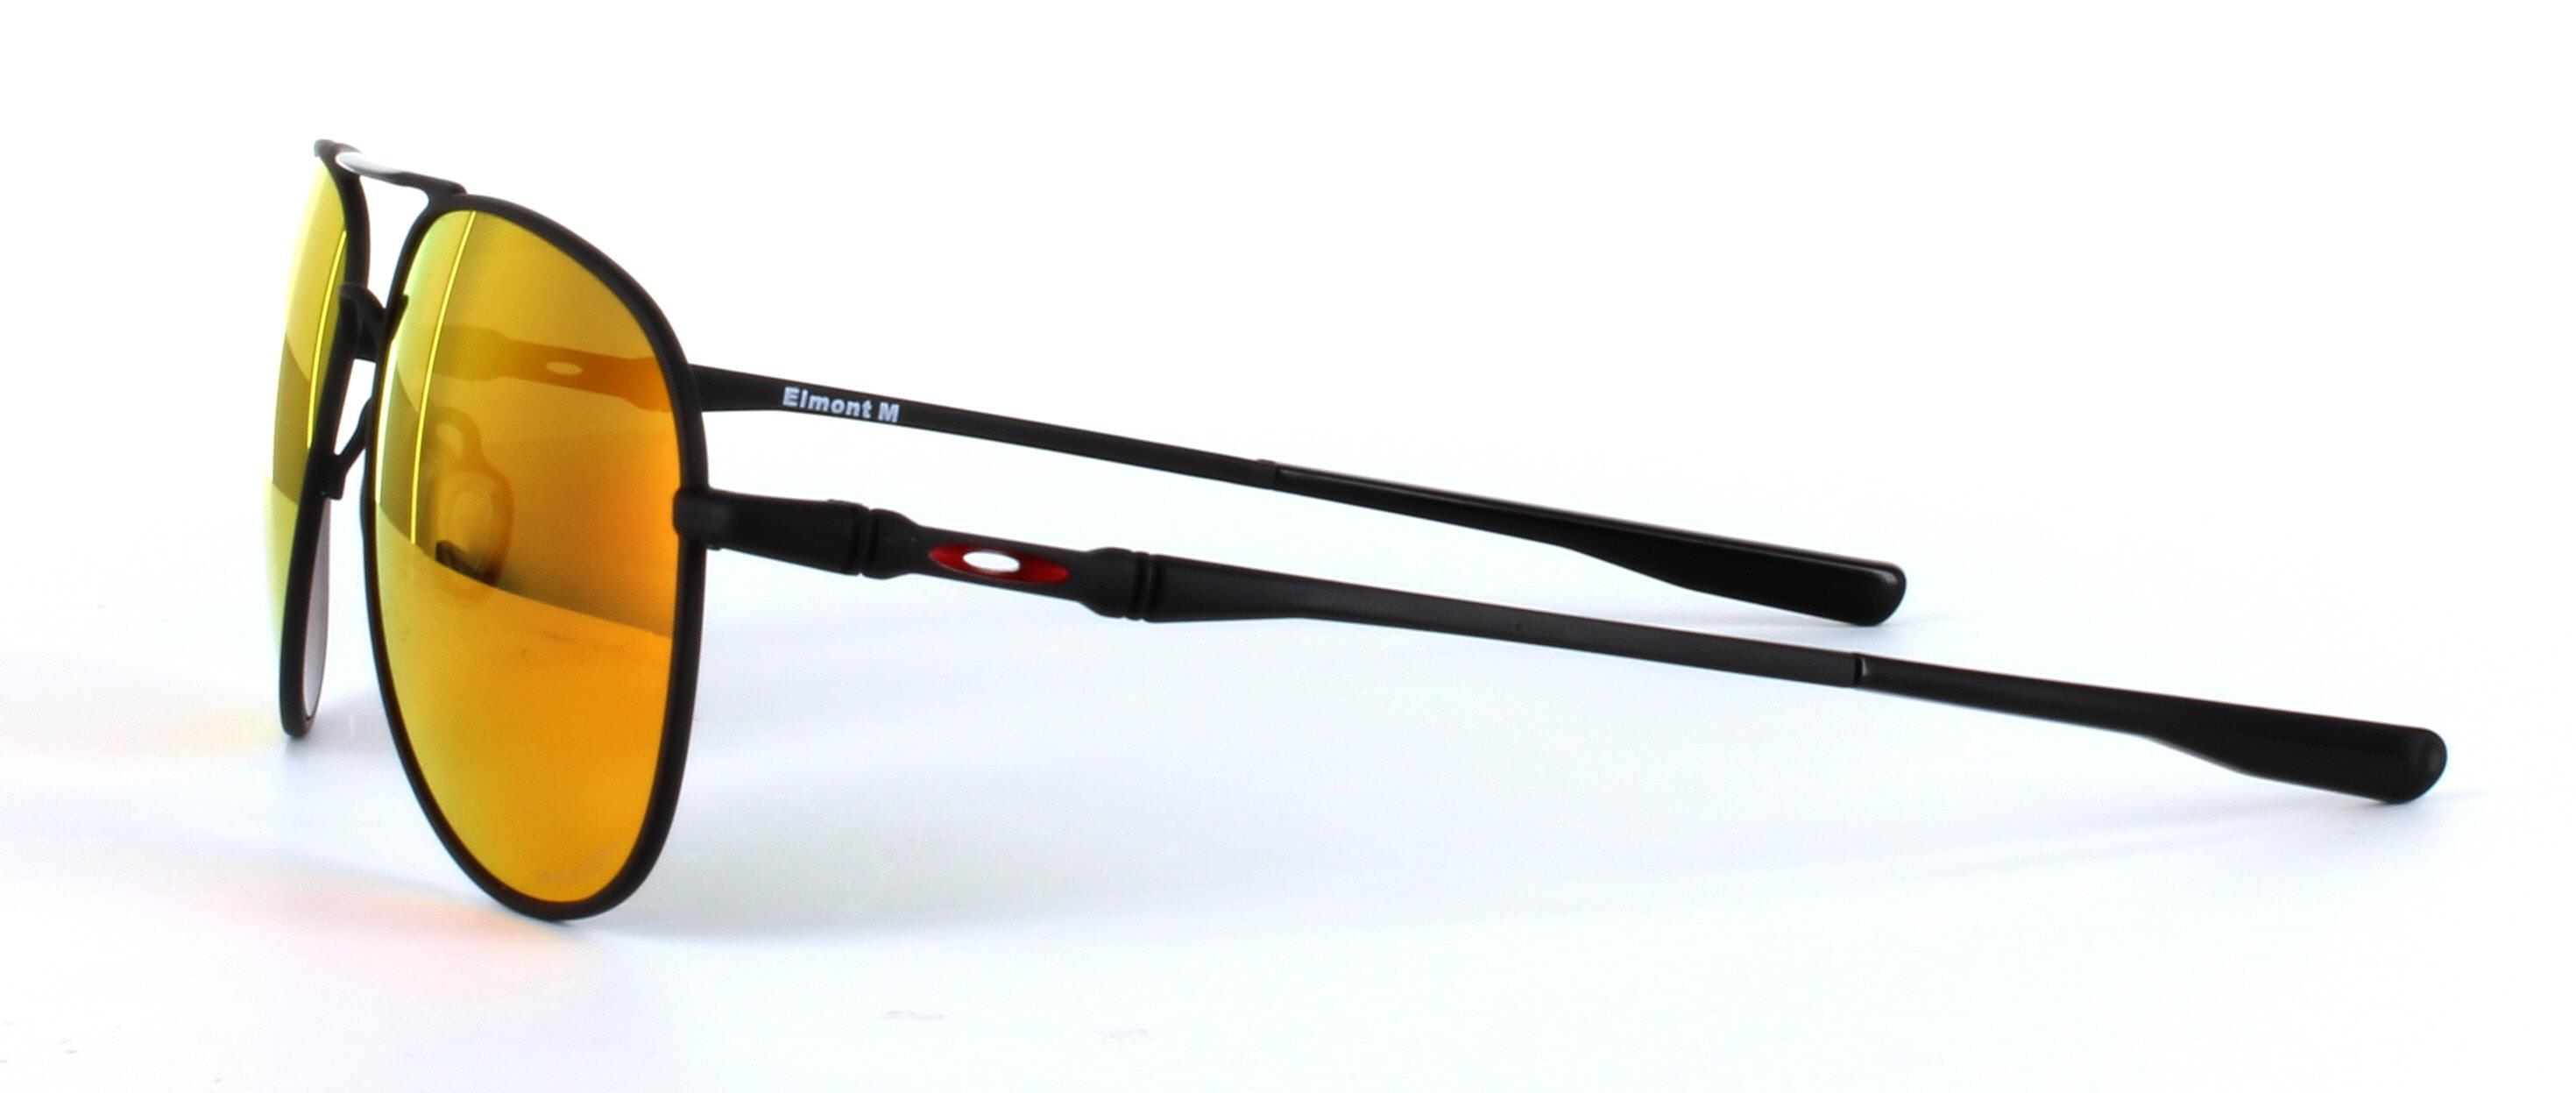 Oakley Elmont Black Full Rim Aviator Metal Sunglasses - Image View 2